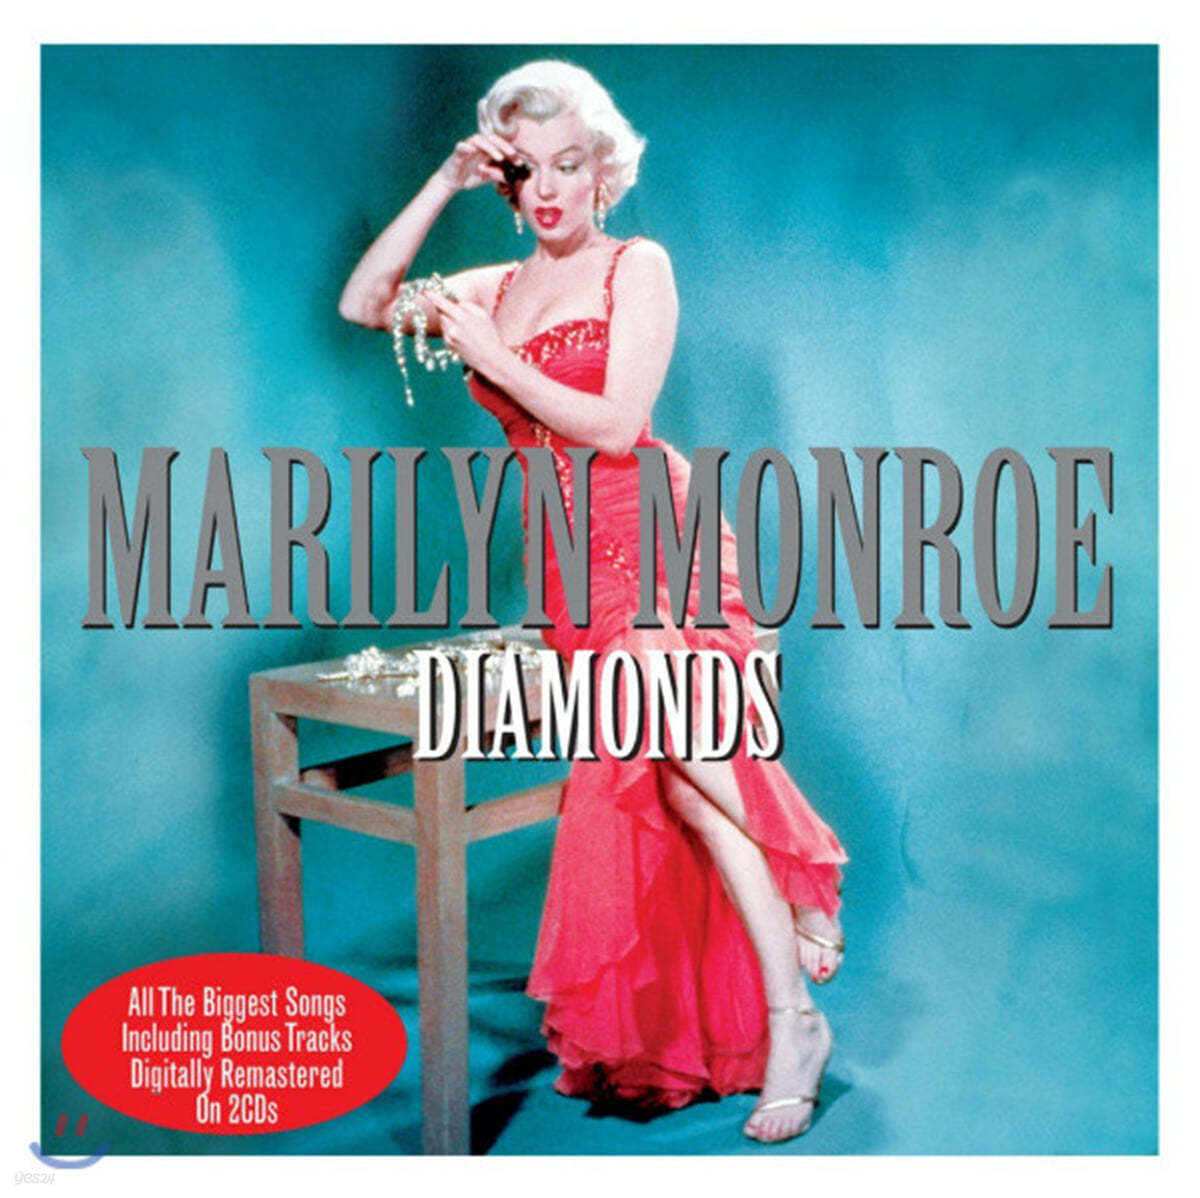 Marilyn Monroe (마릴린 먼로) - Diamonds